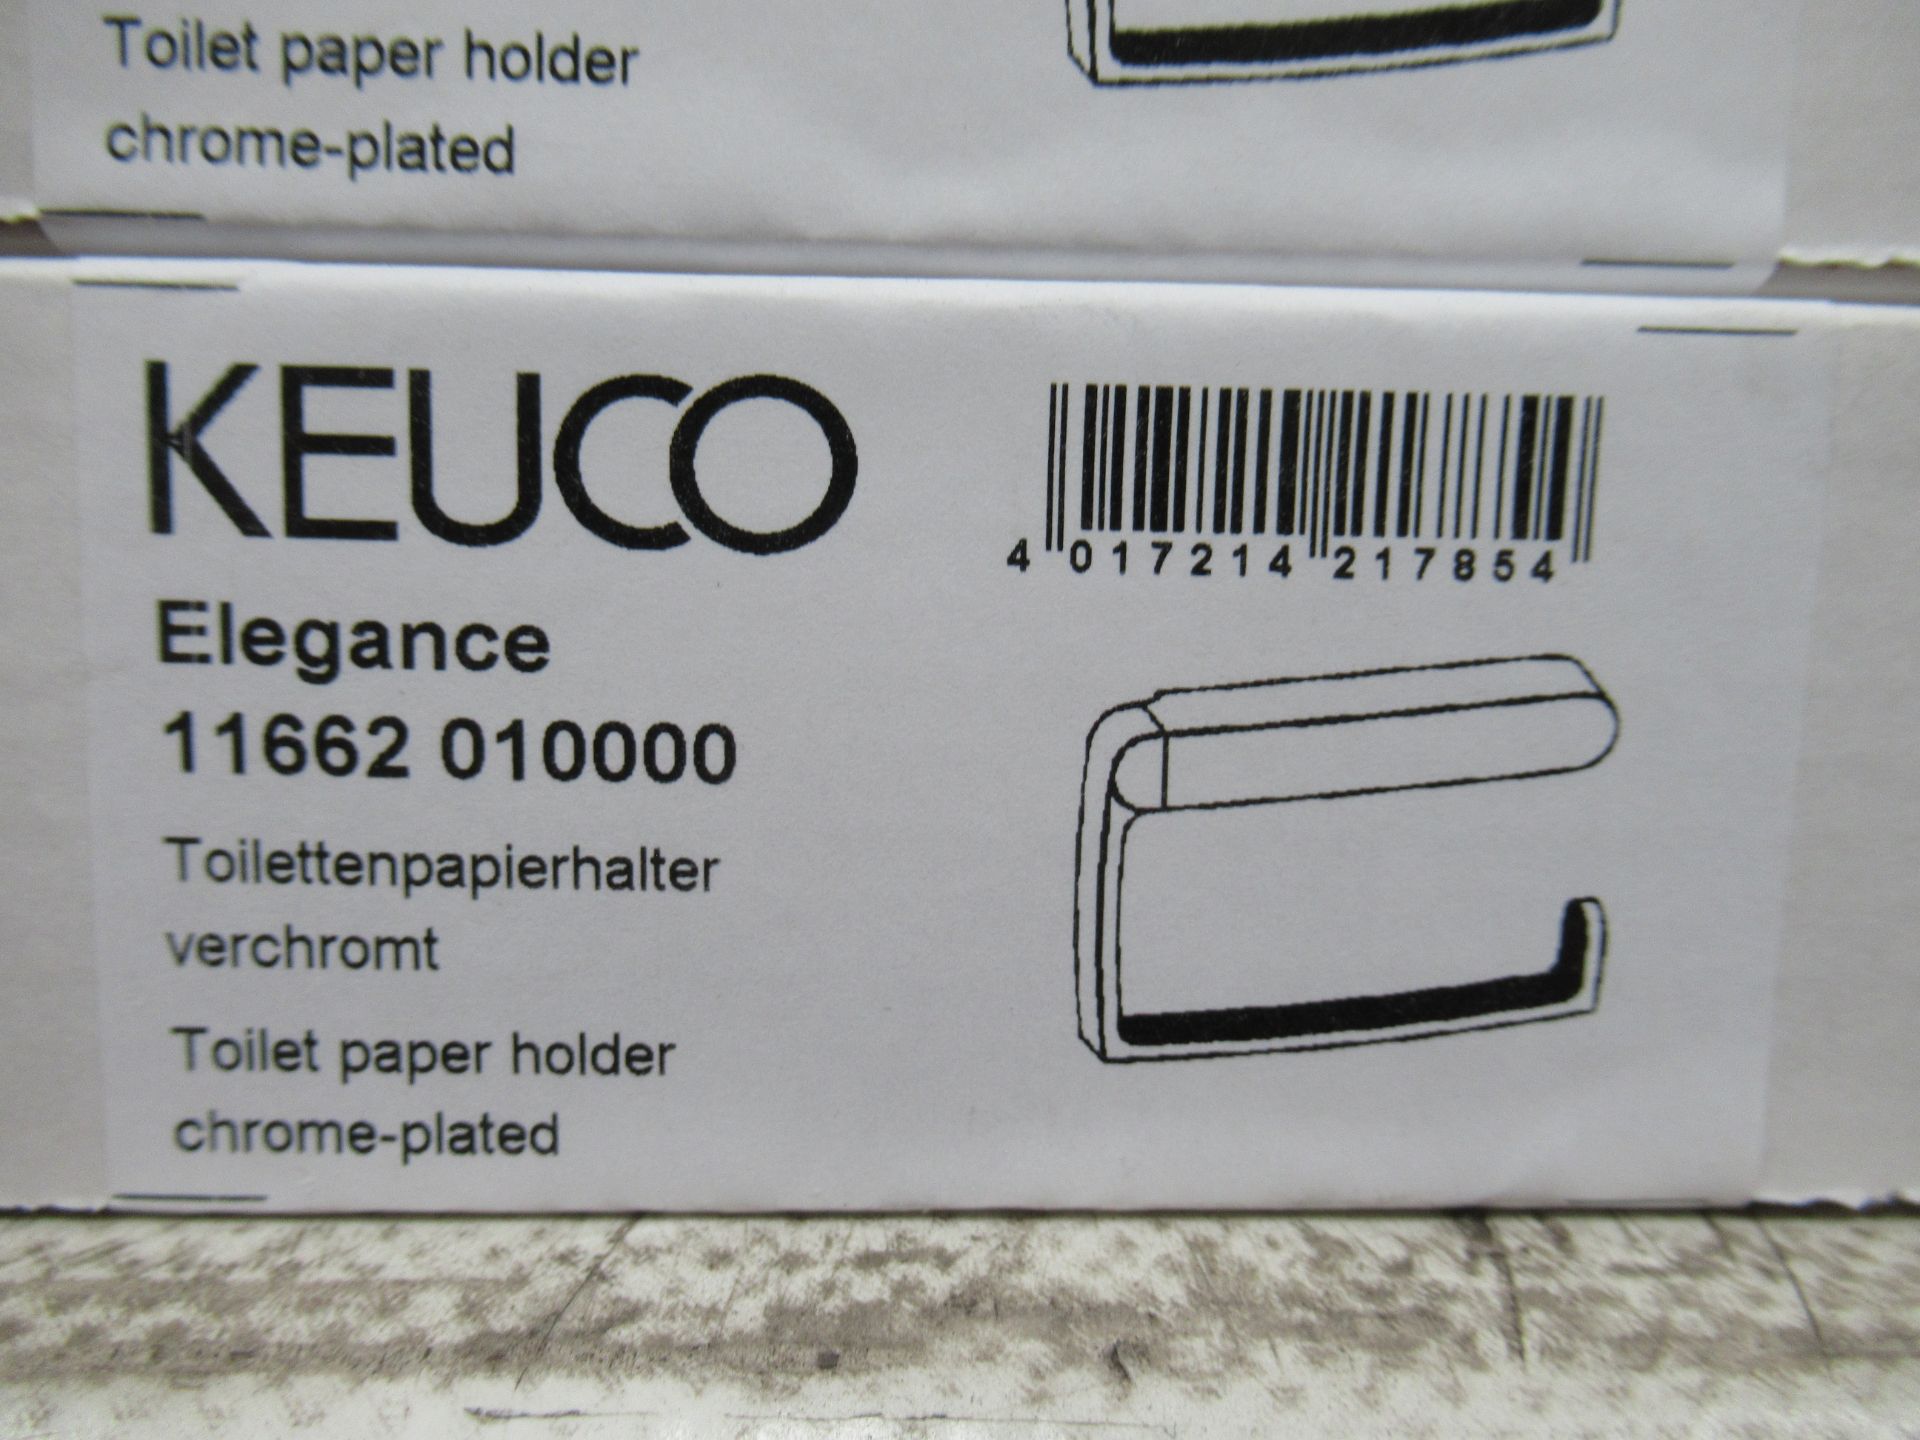 3 x Keuco Elegance Toilet Paper Holders Chrome Plated, P/N 11662-010000 - Image 2 of 2